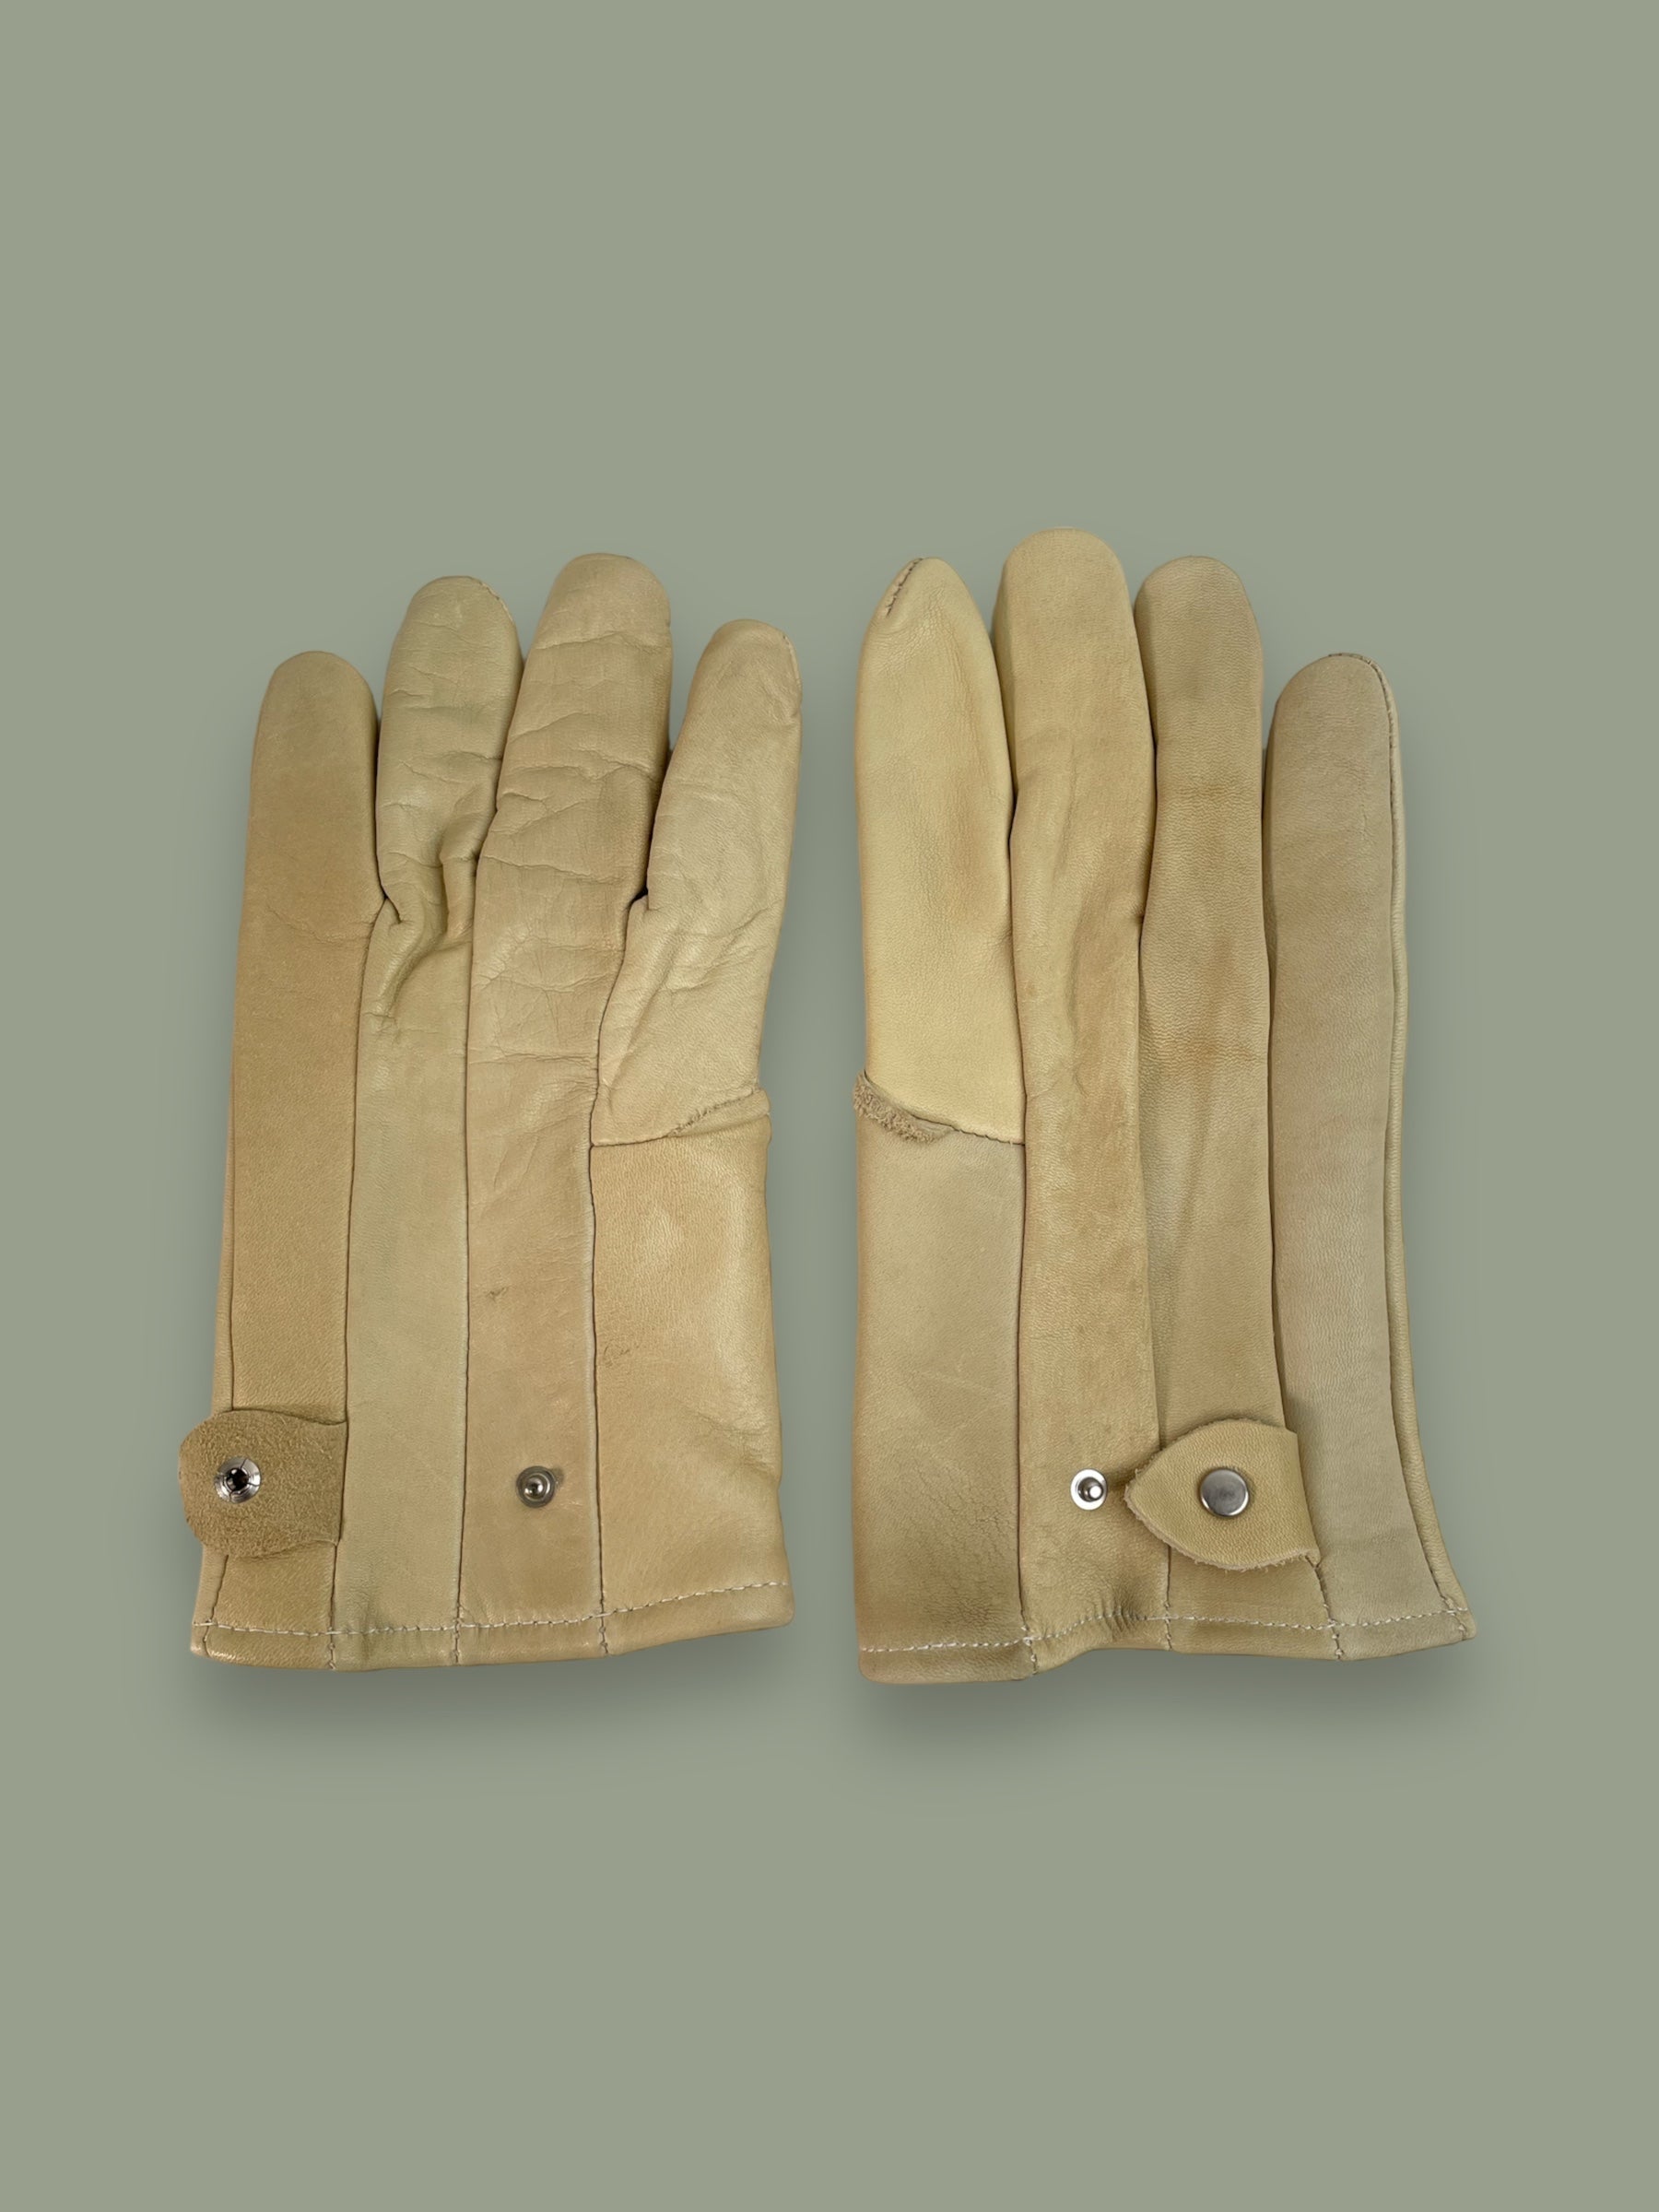 Pair of Kangaroo Leather Tan Gloves in Size Large